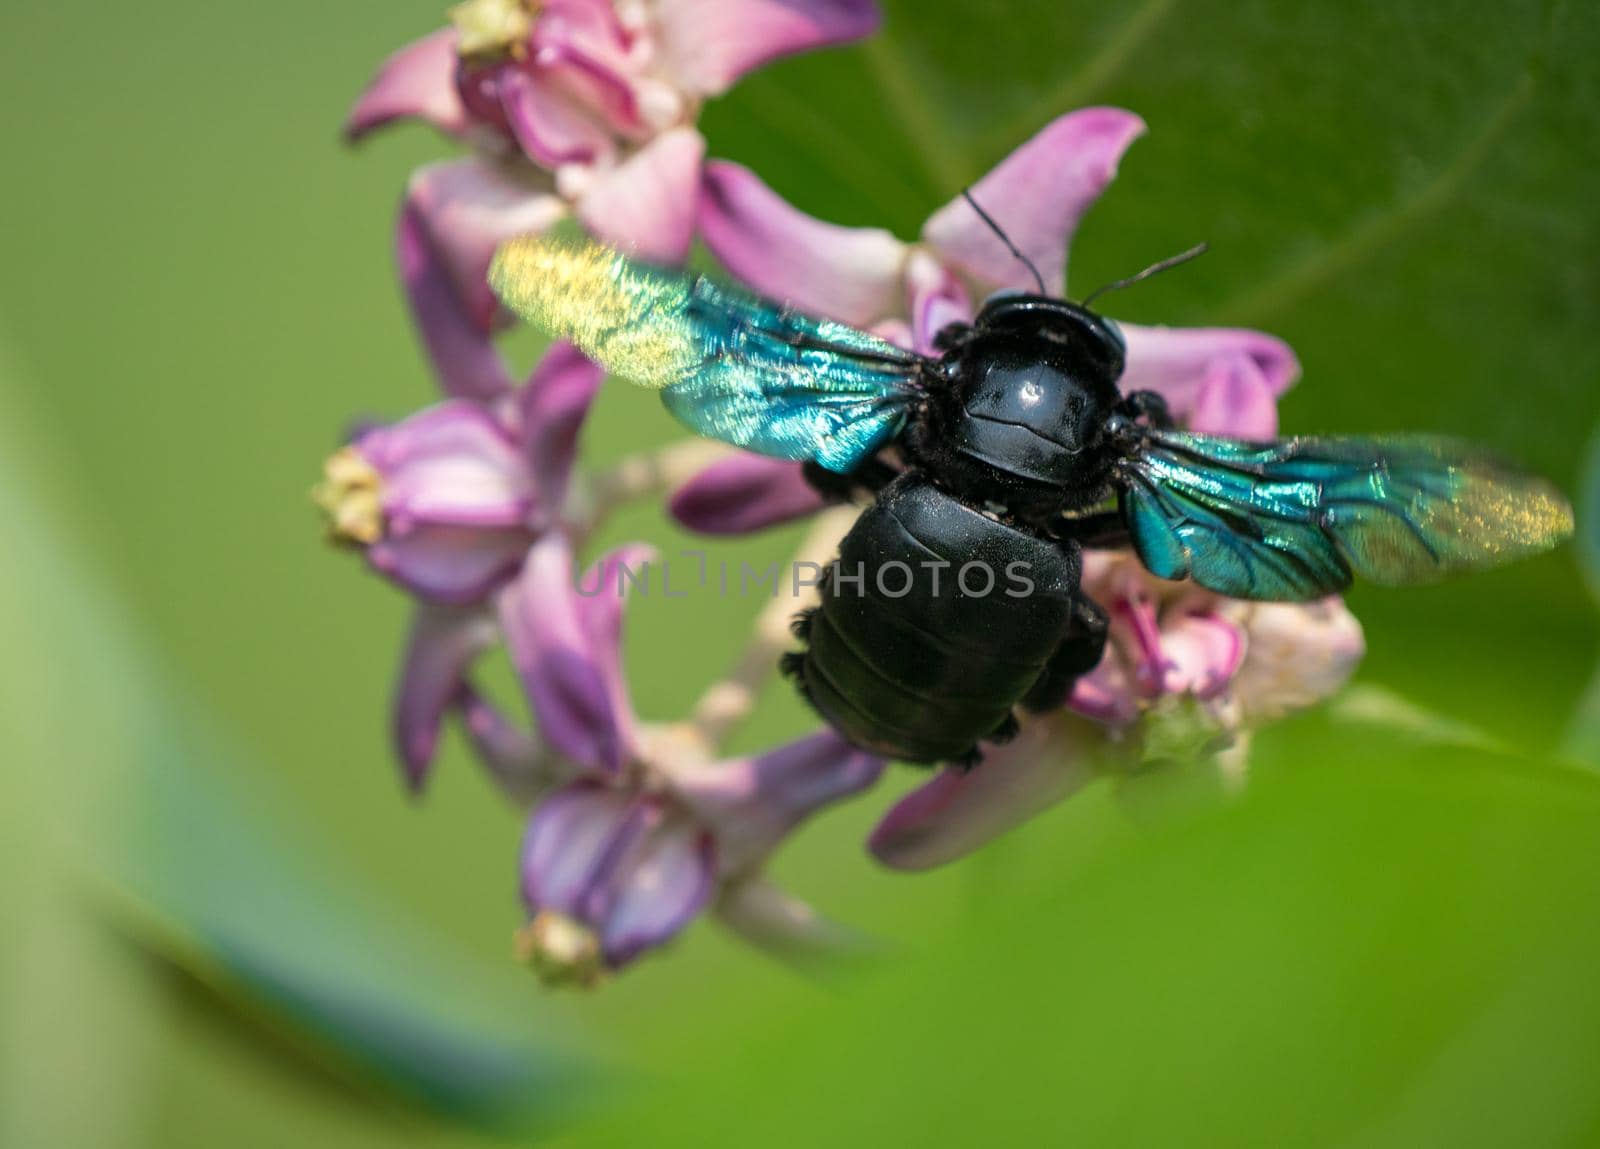 Xylocopa valga or carpenter bee on Apple of Sodom flowers by Arsgera